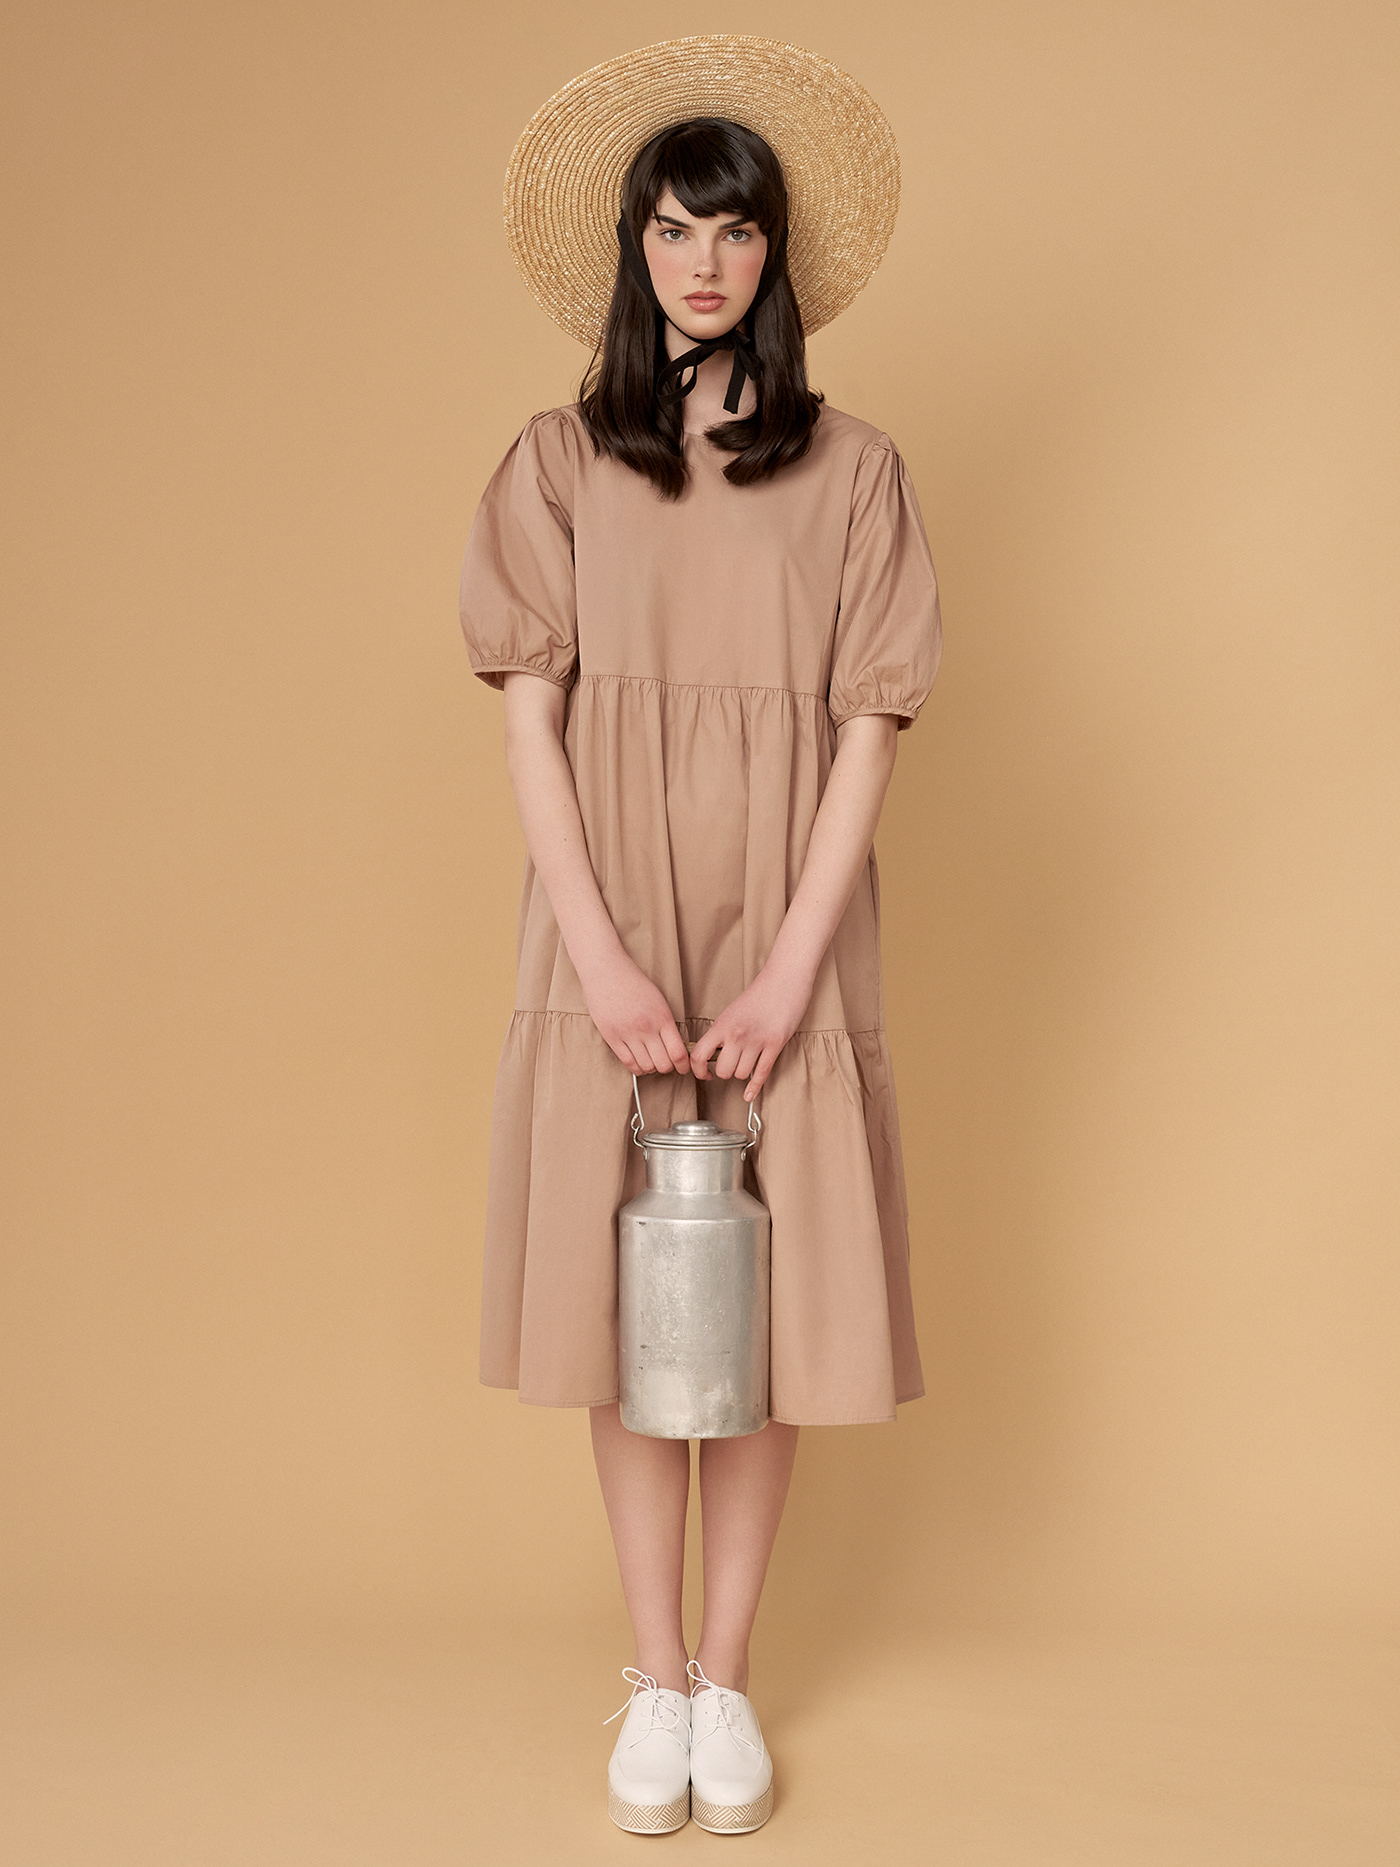 Amish Fashion  Photography  romantic styling 